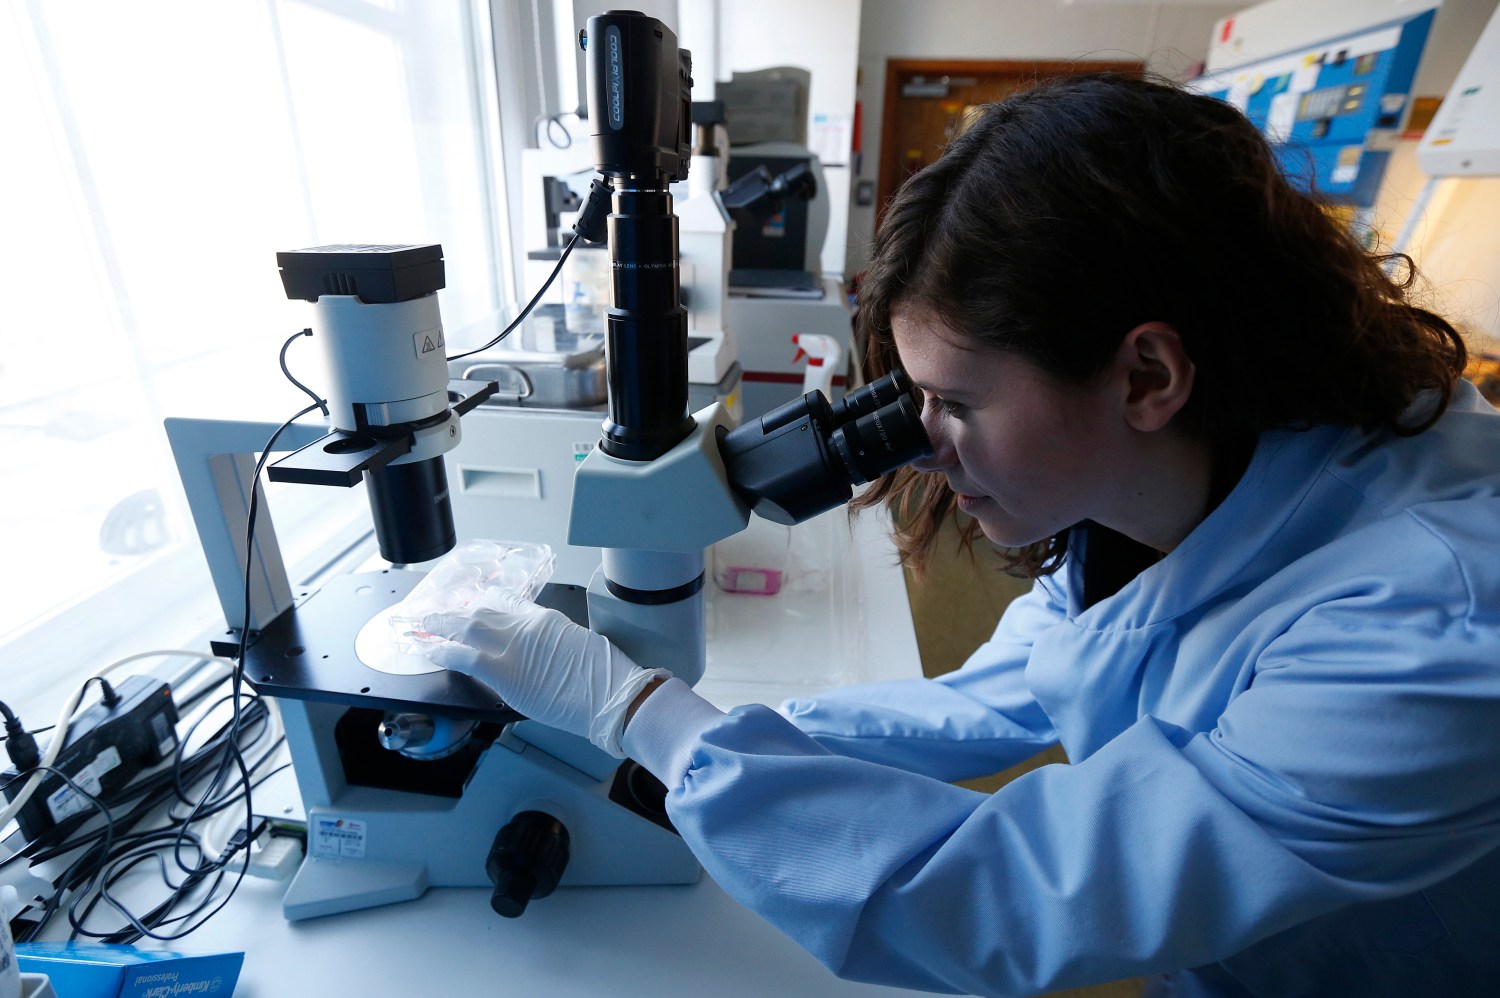 A woman studies cancer cells through a microscope